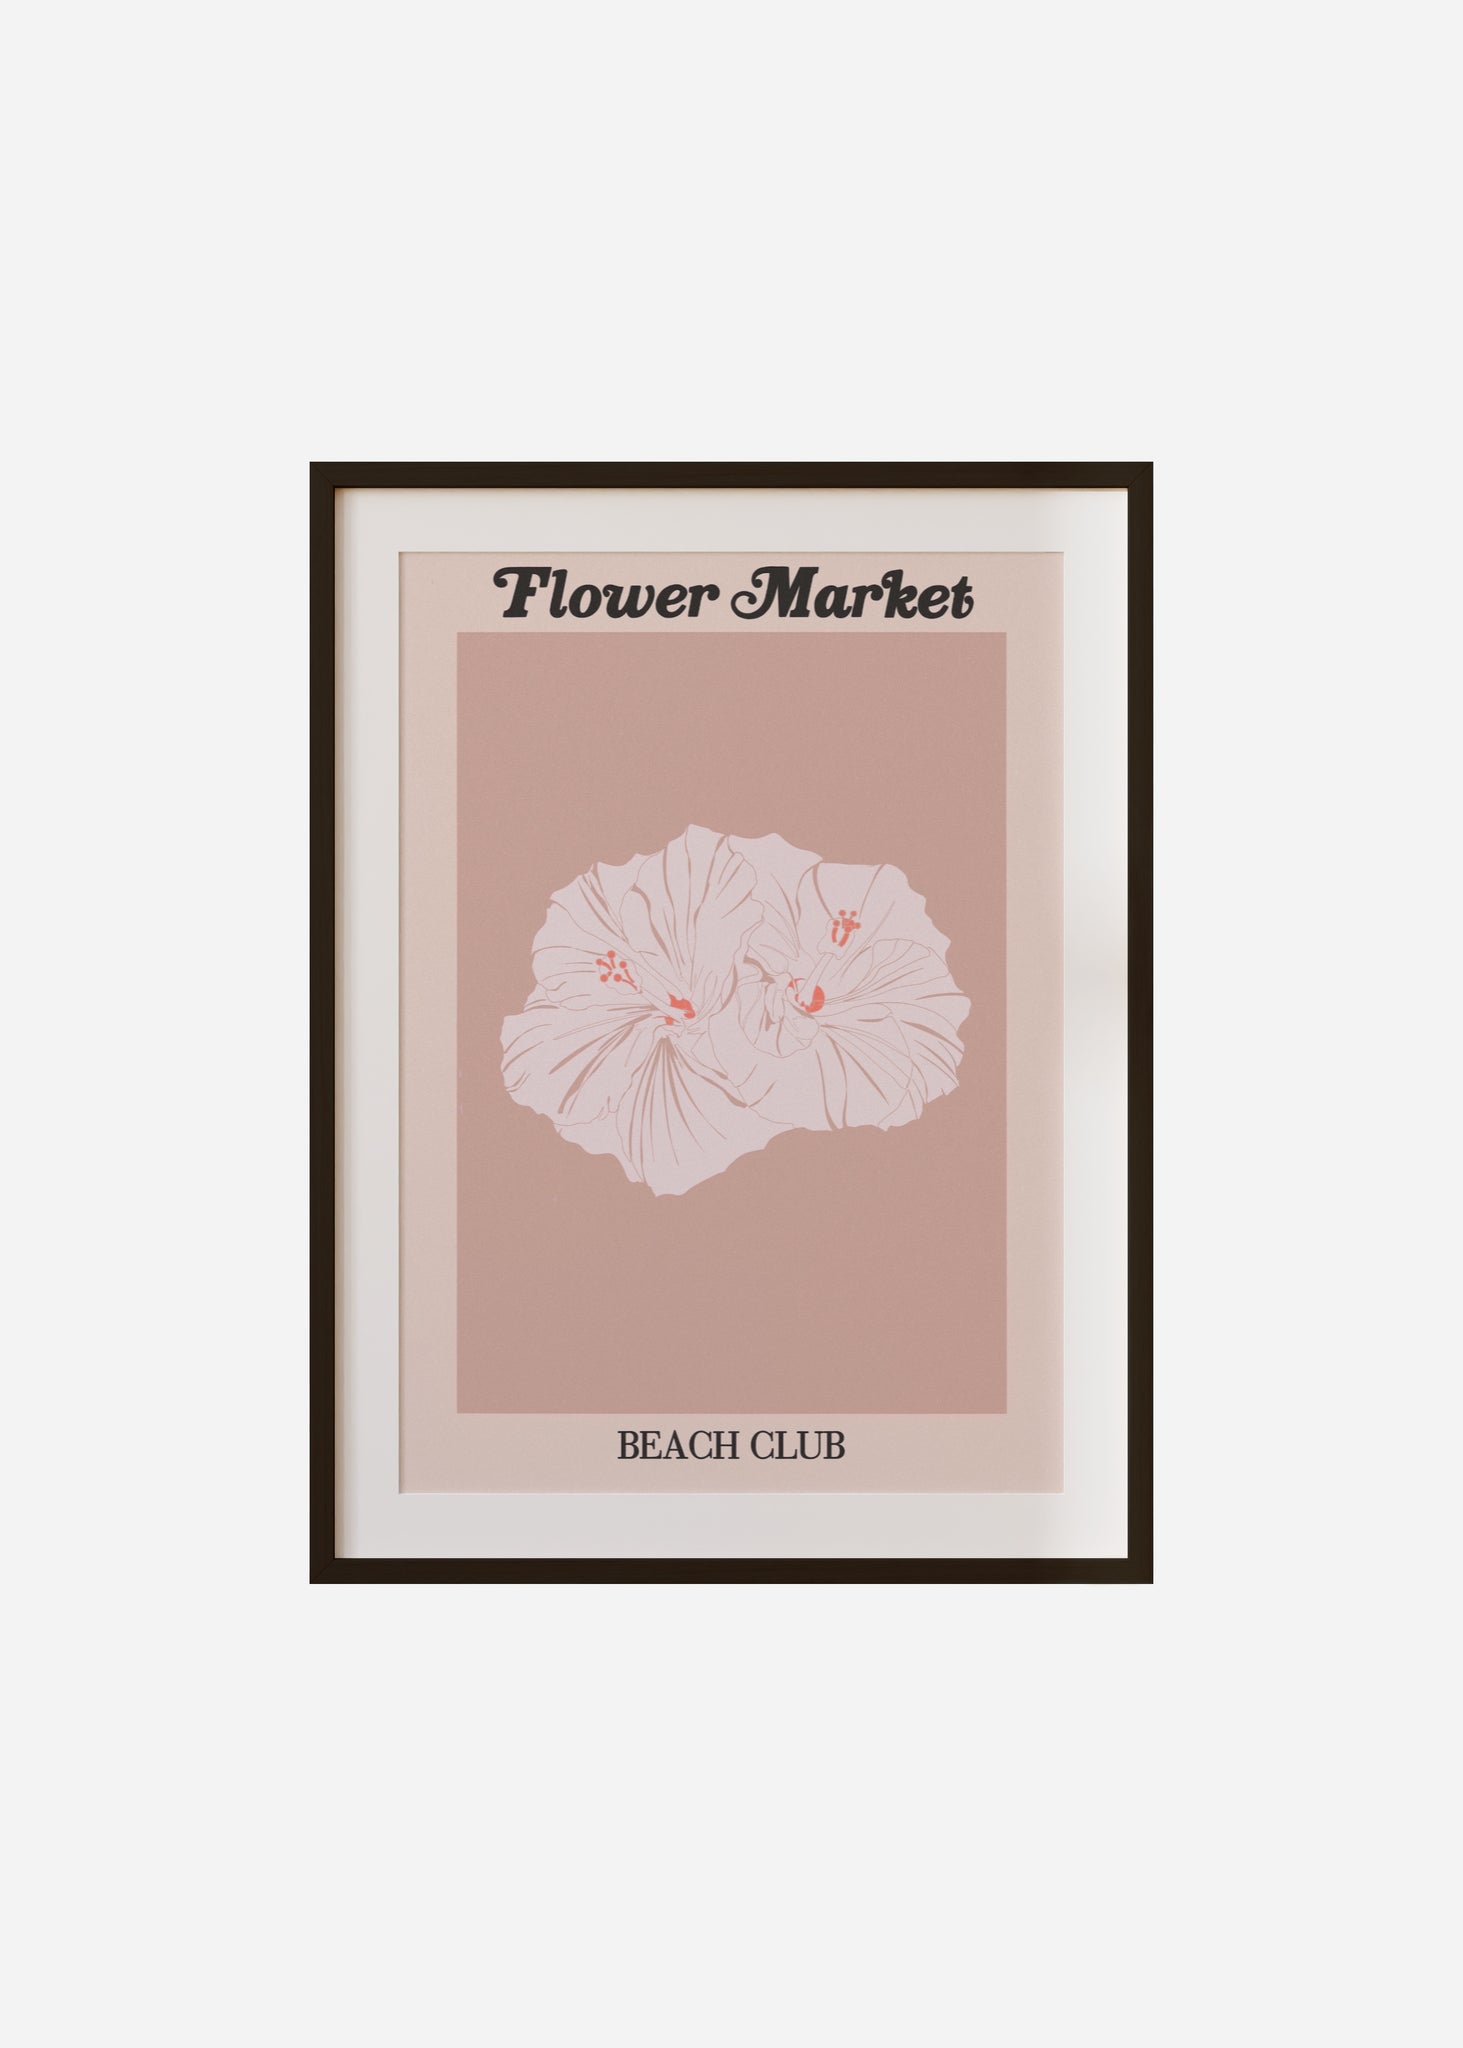 flower market / beach club Framed & Mounted Print